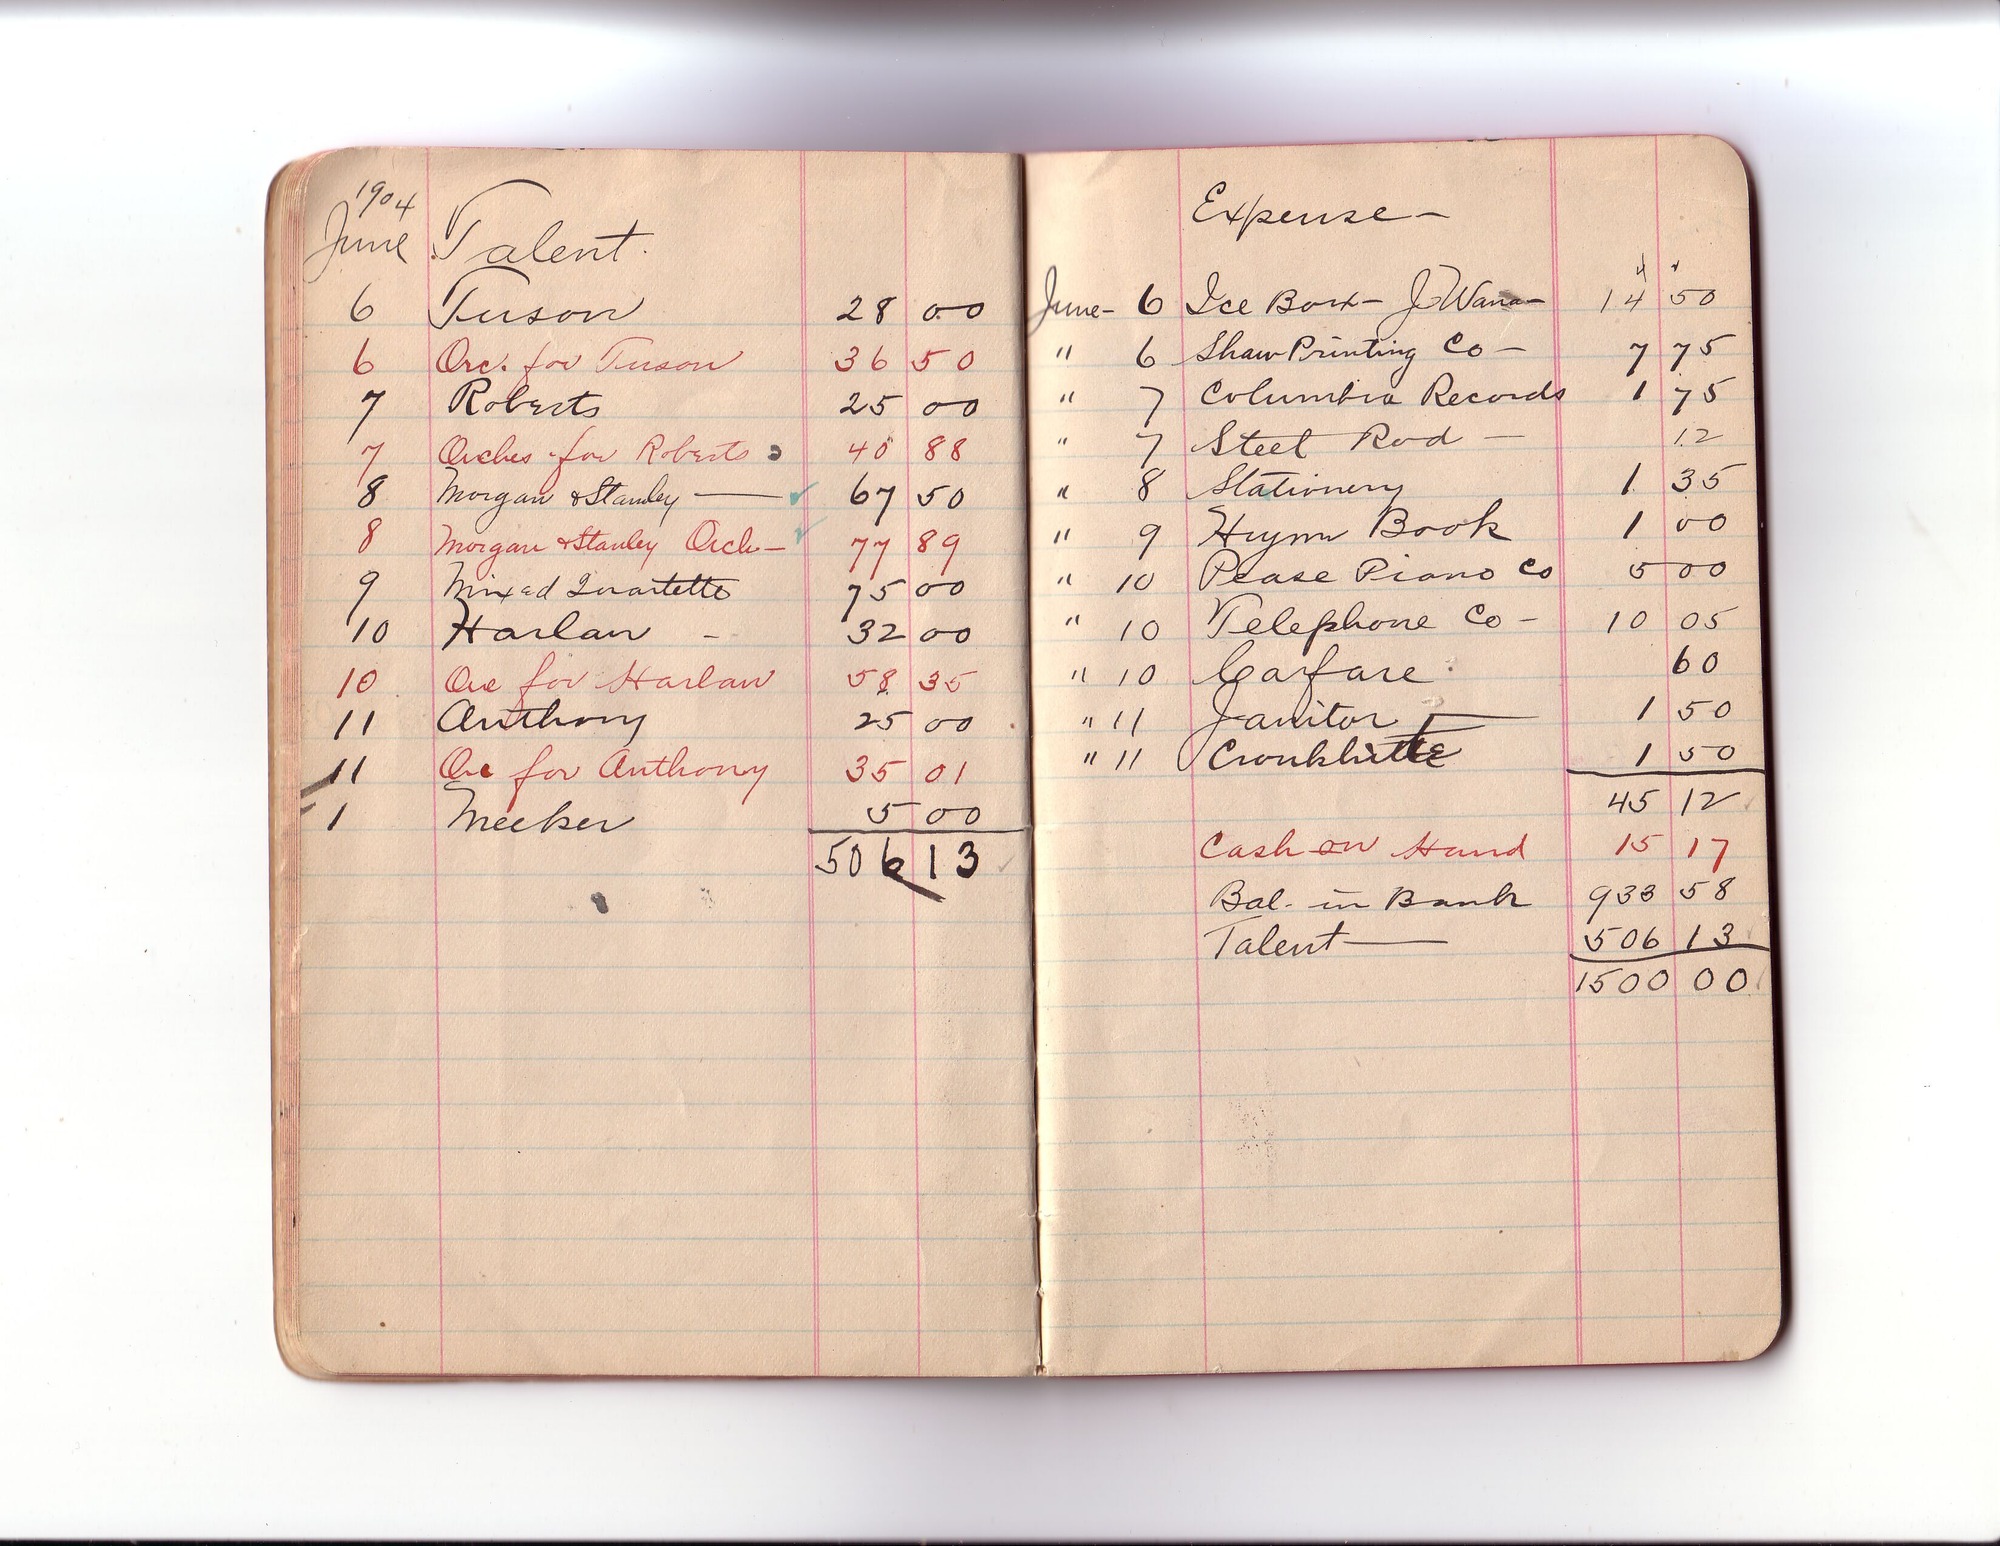 Thomas Edison's New York City Recording Studio Cash Book 01 (of 21), Image 12 (of 41).